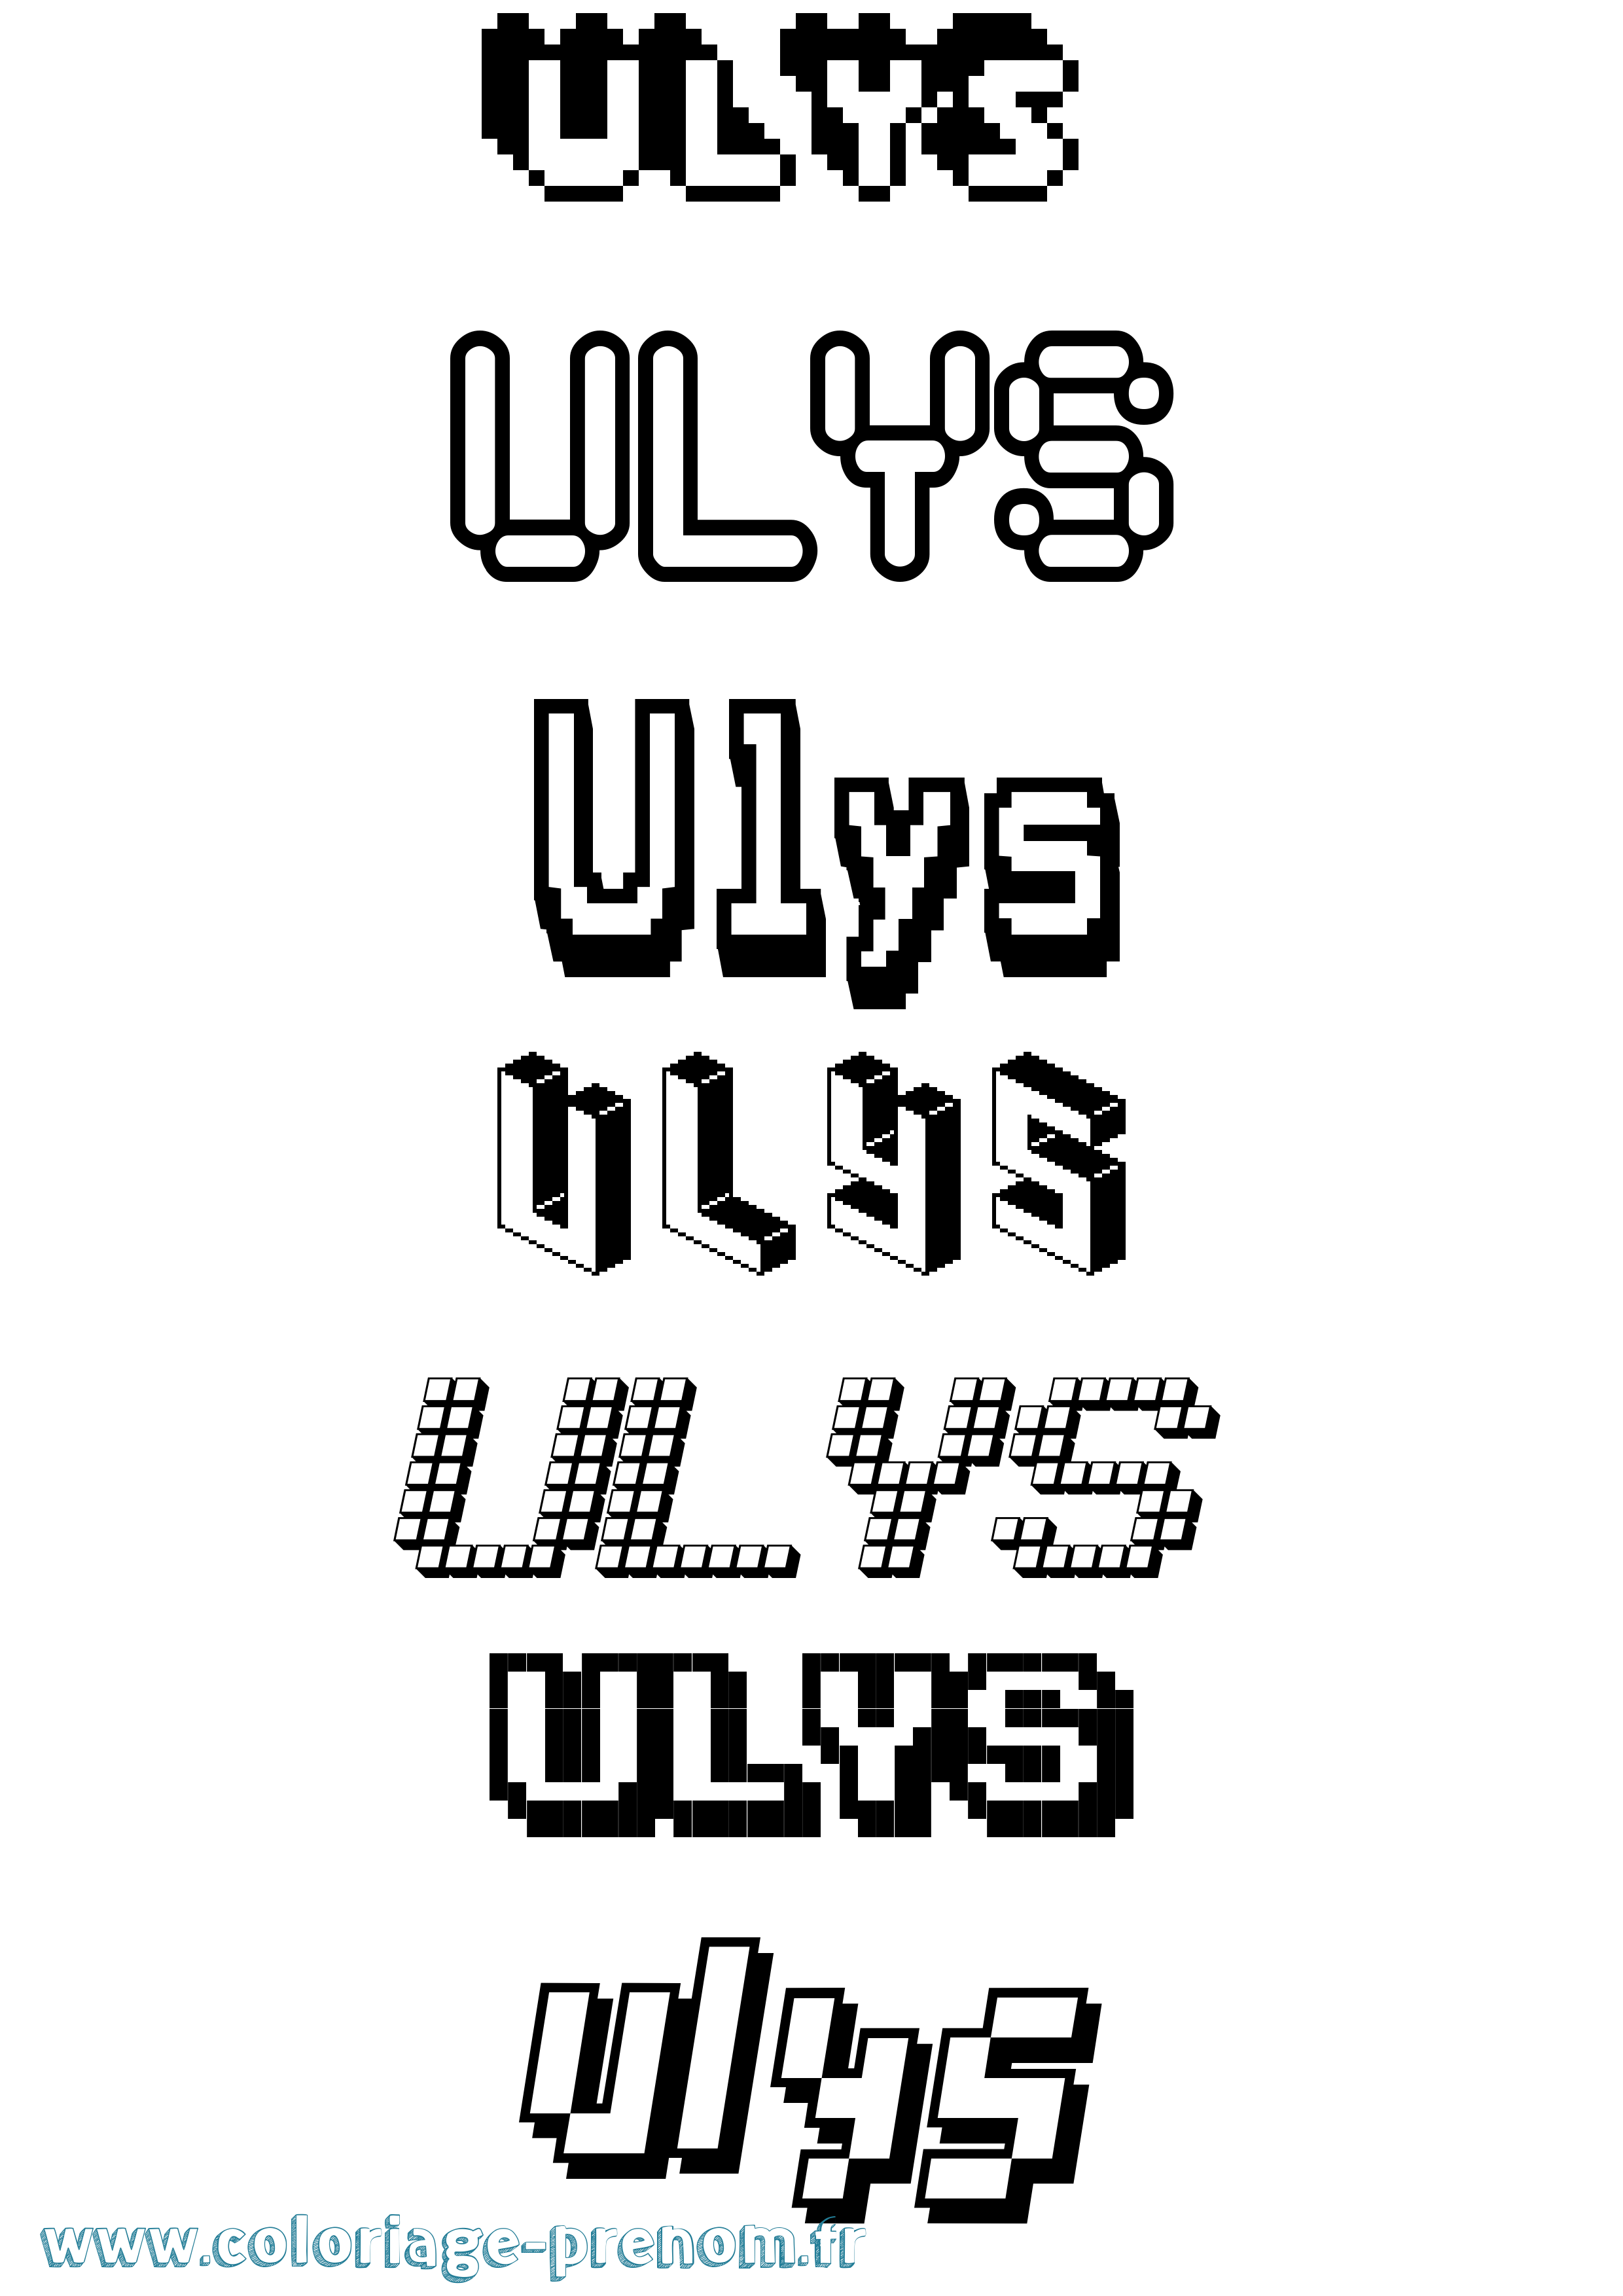 Coloriage prénom Ulys Pixel